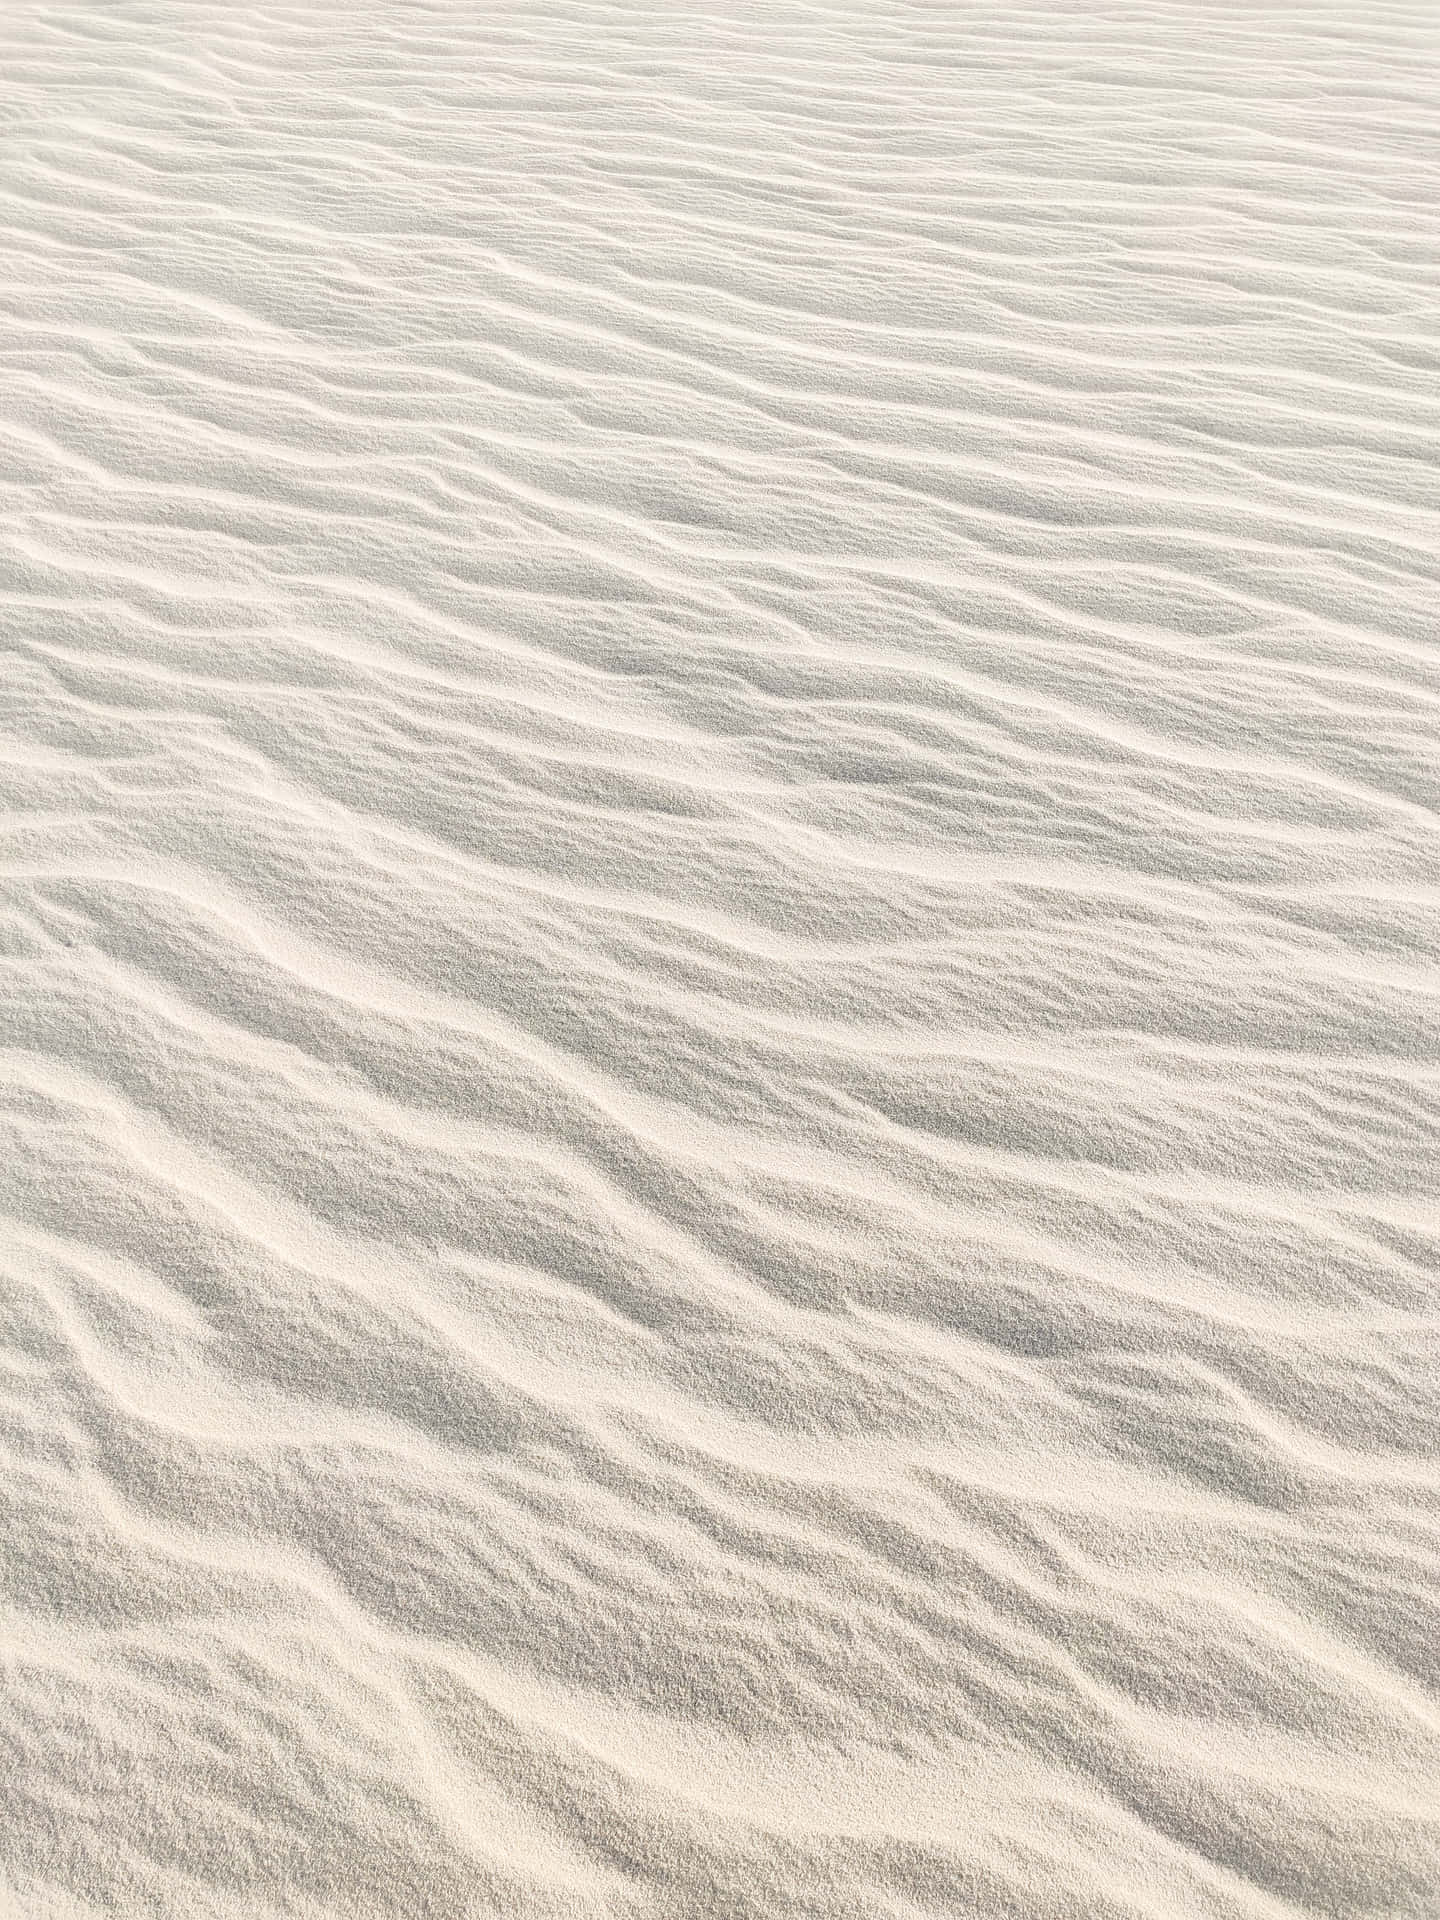 Dunedi Sabbia Bianca Sfondo